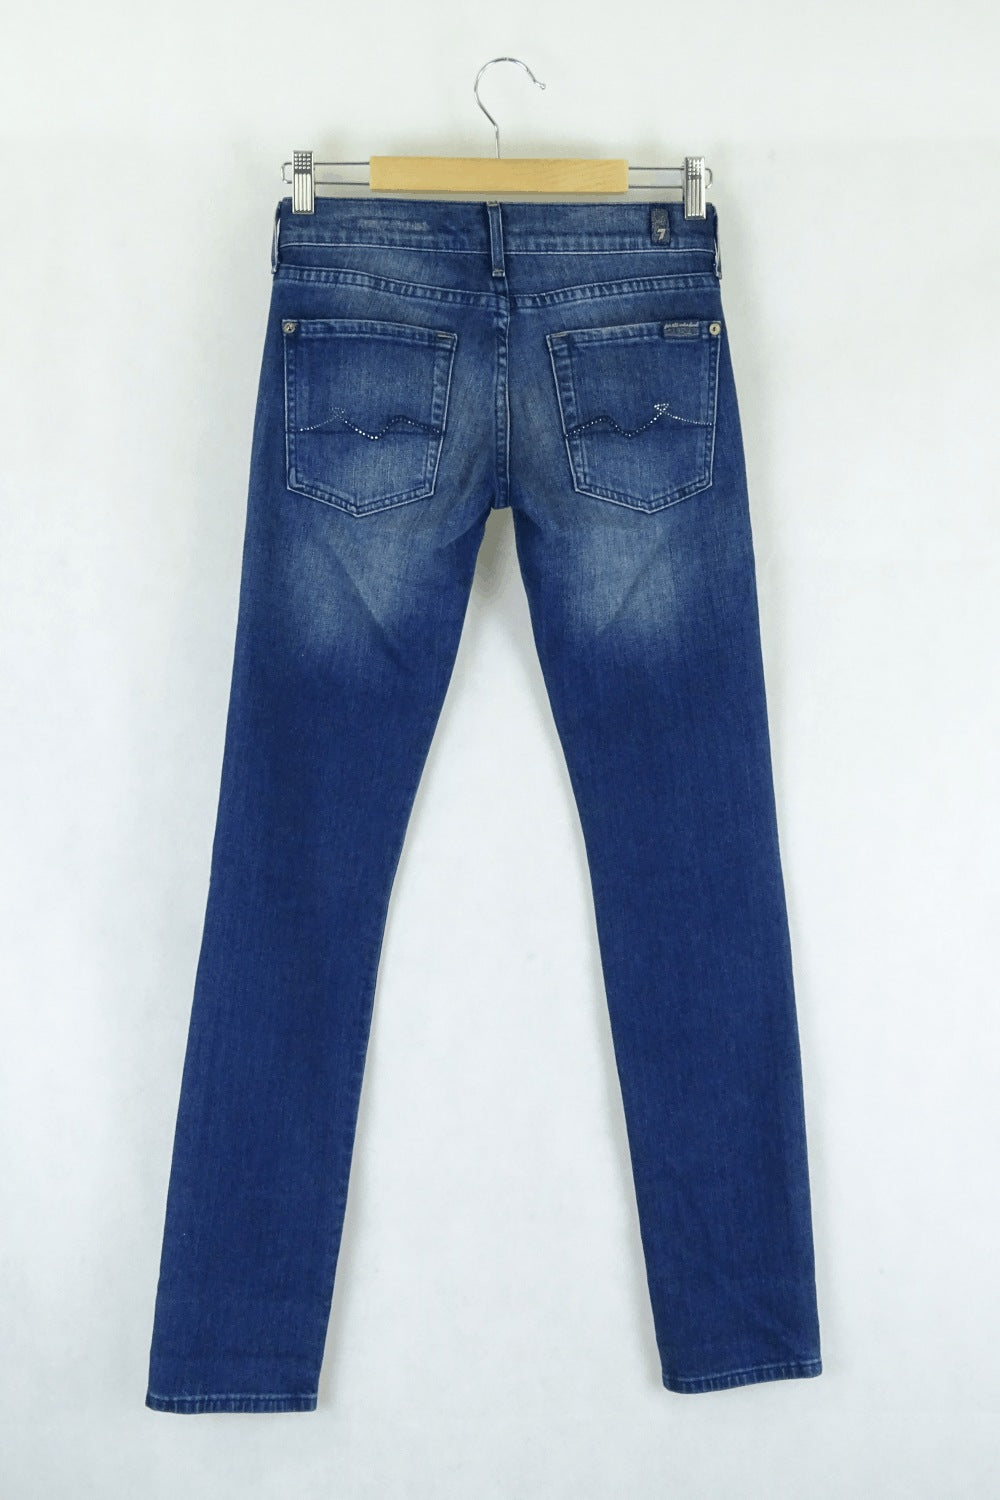 7 For All Mankind Blue Denim Skinny Jeans 25